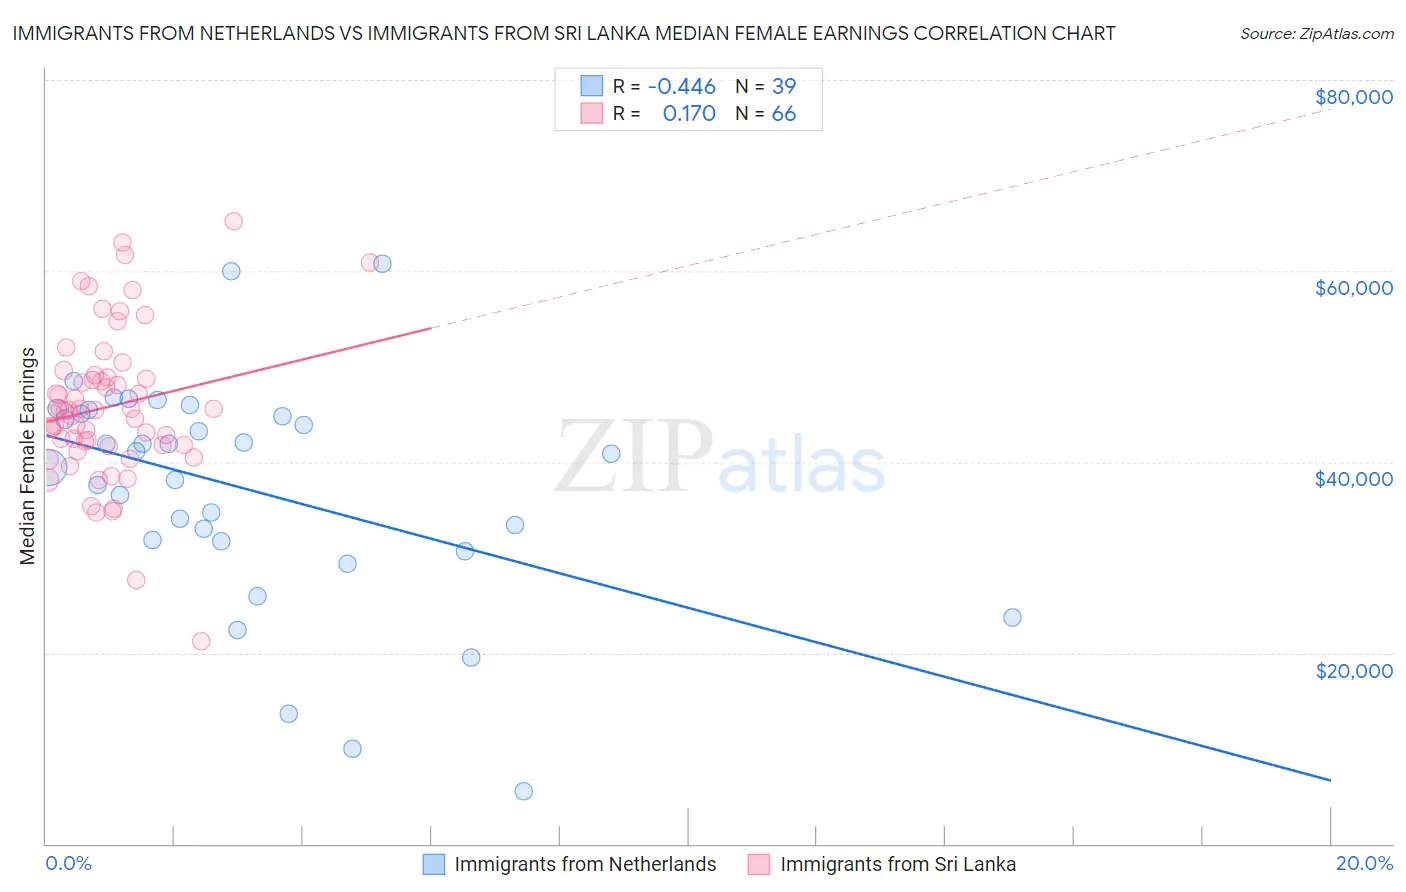 Immigrants from Netherlands vs Immigrants from Sri Lanka Median Female Earnings